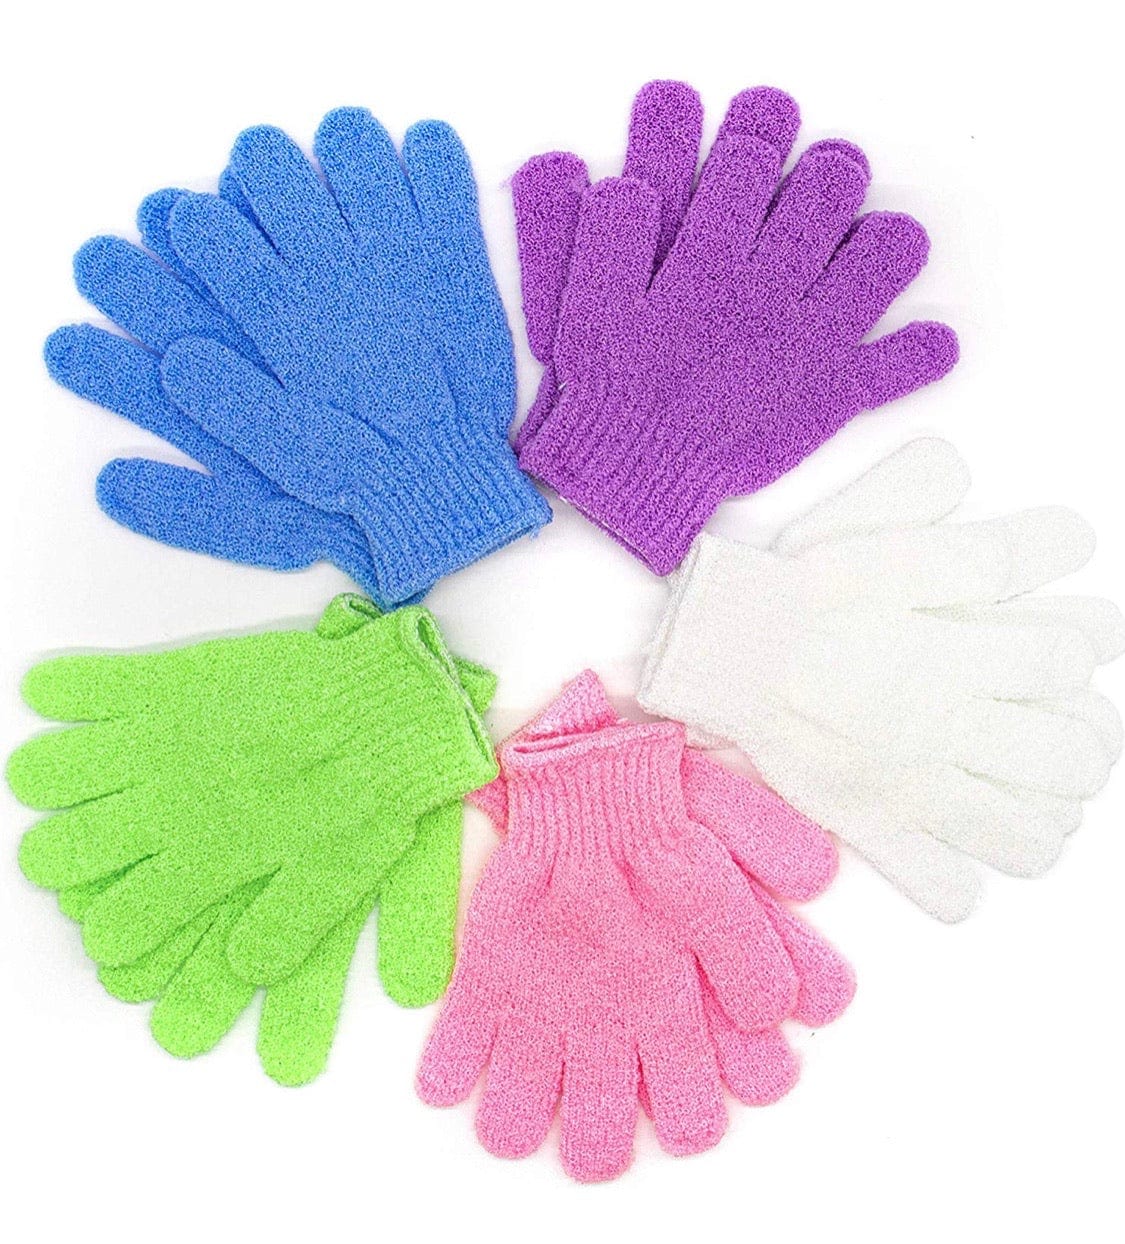 Exfoliating Bath Gloves - FabYouLife